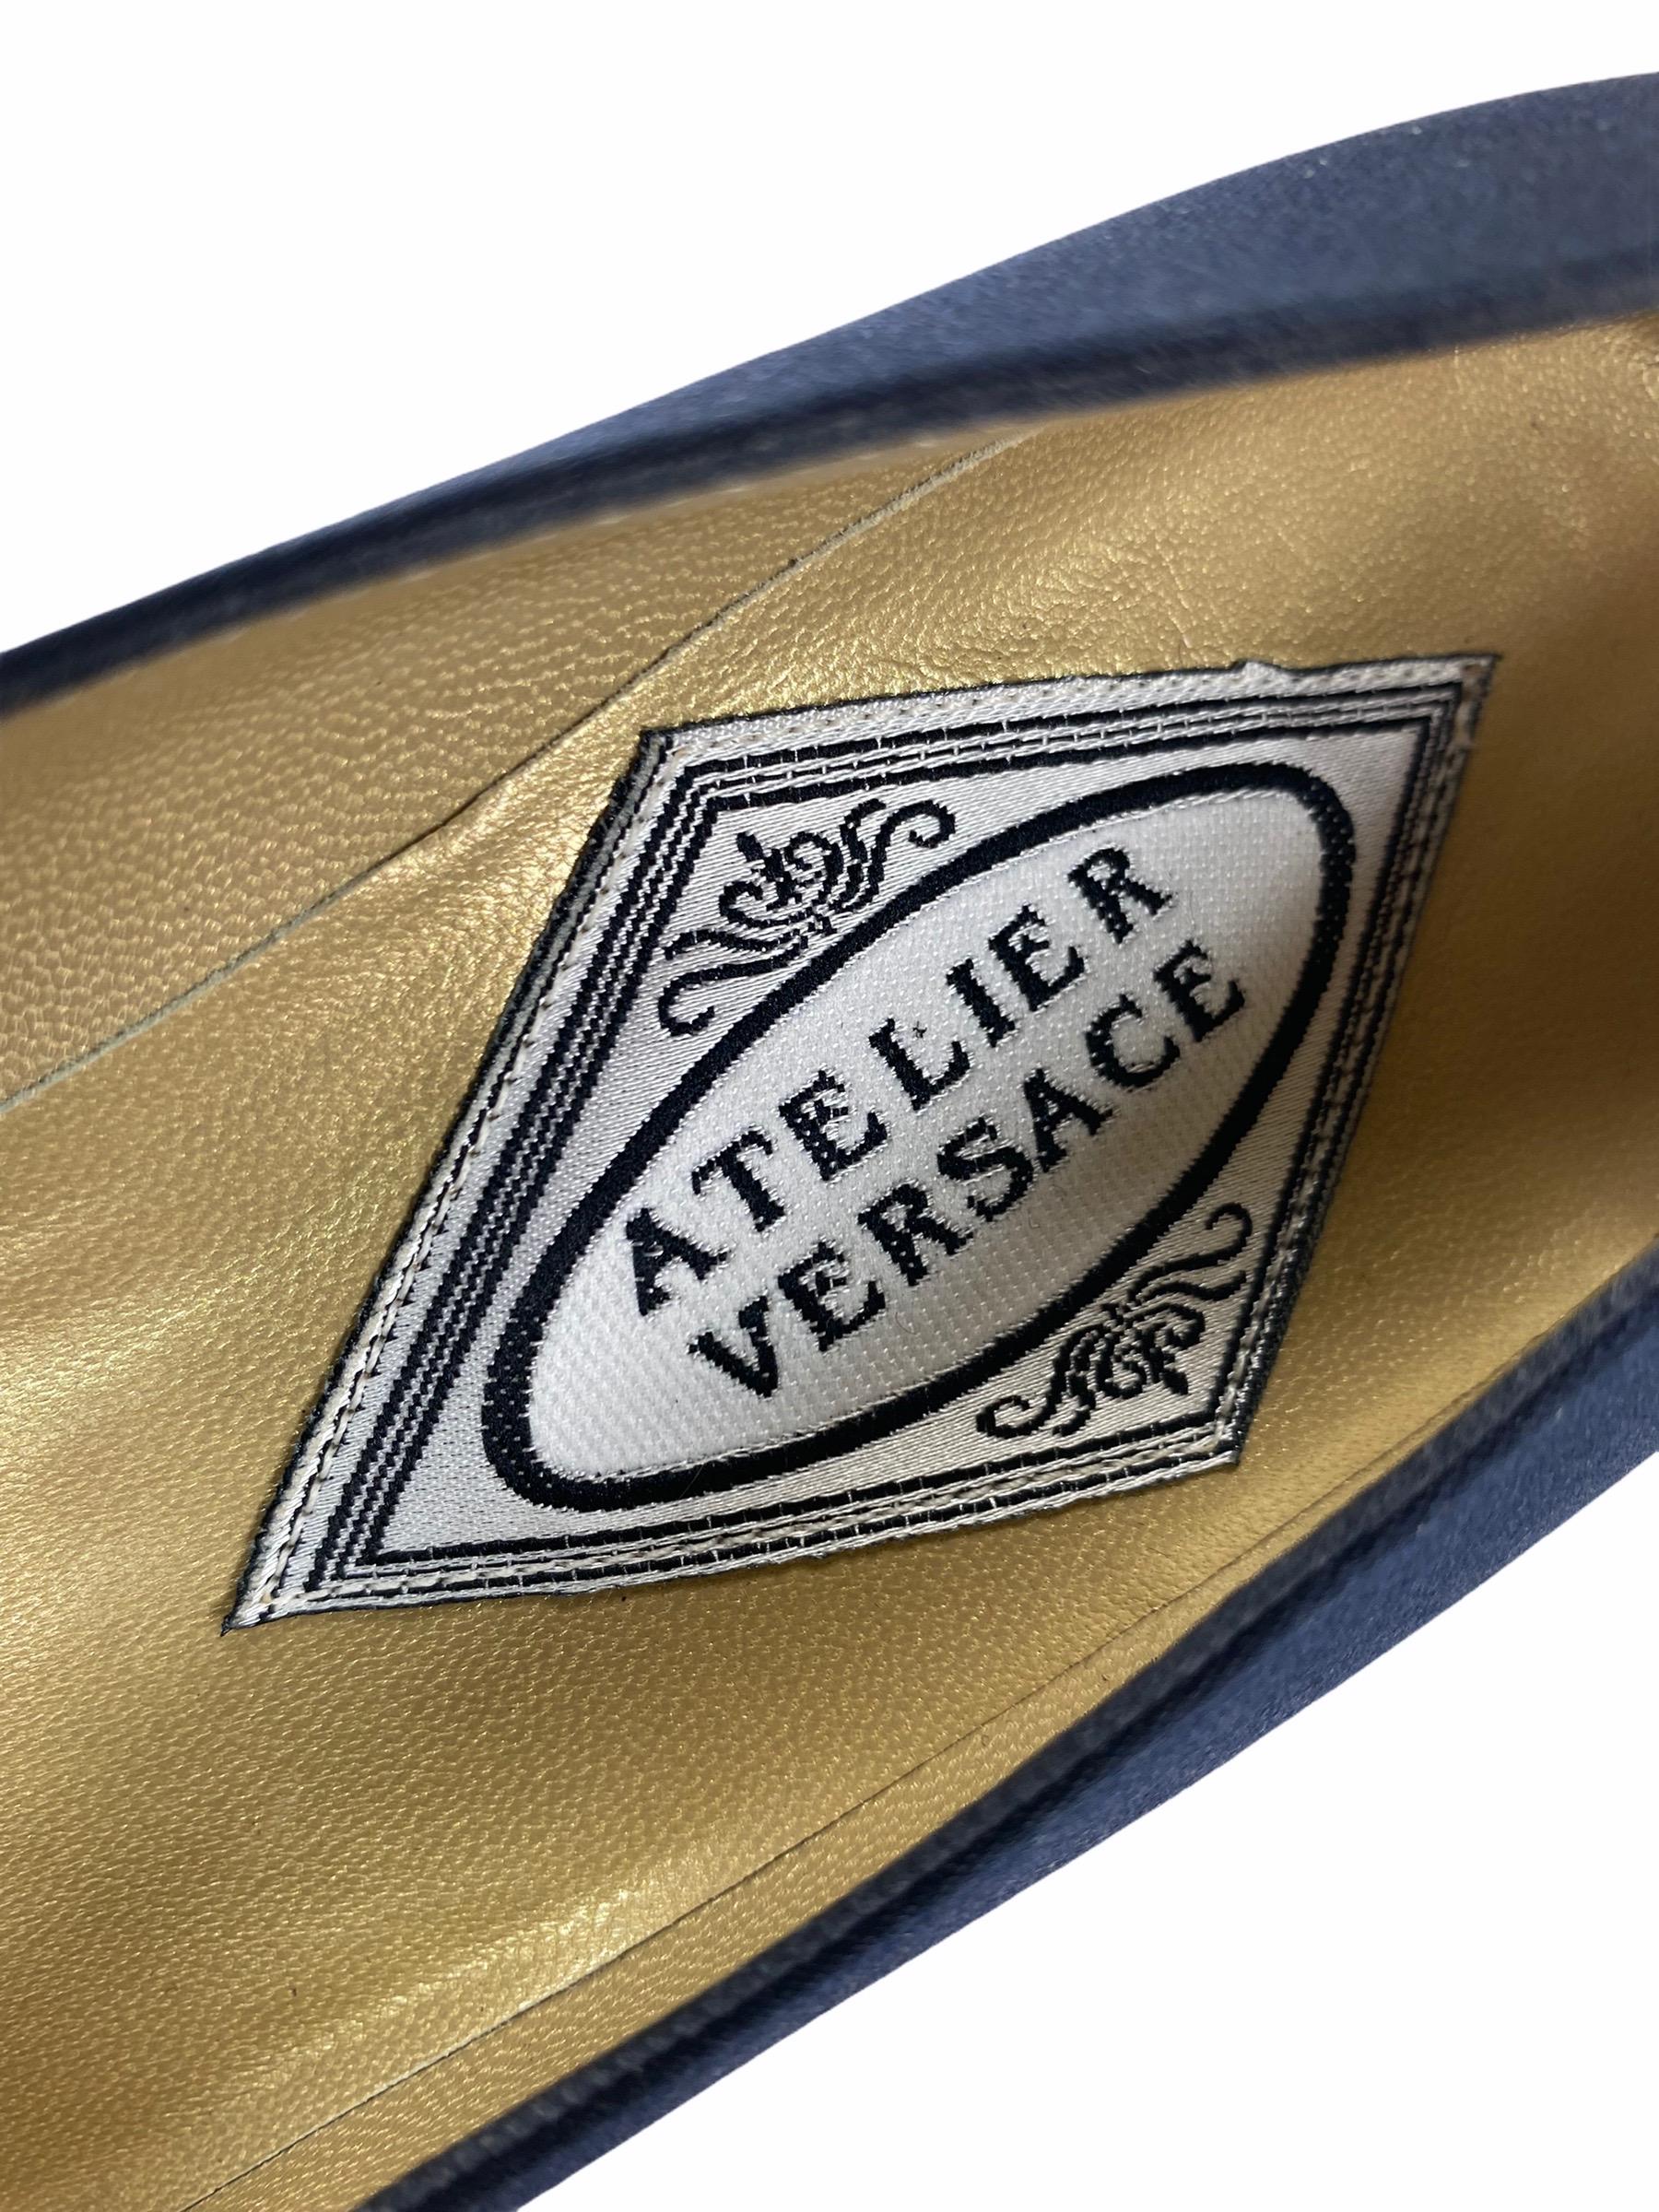 1991 Vintage Versace Atelier Black Satin Shoes 37 - 7 NWT For Sale 1